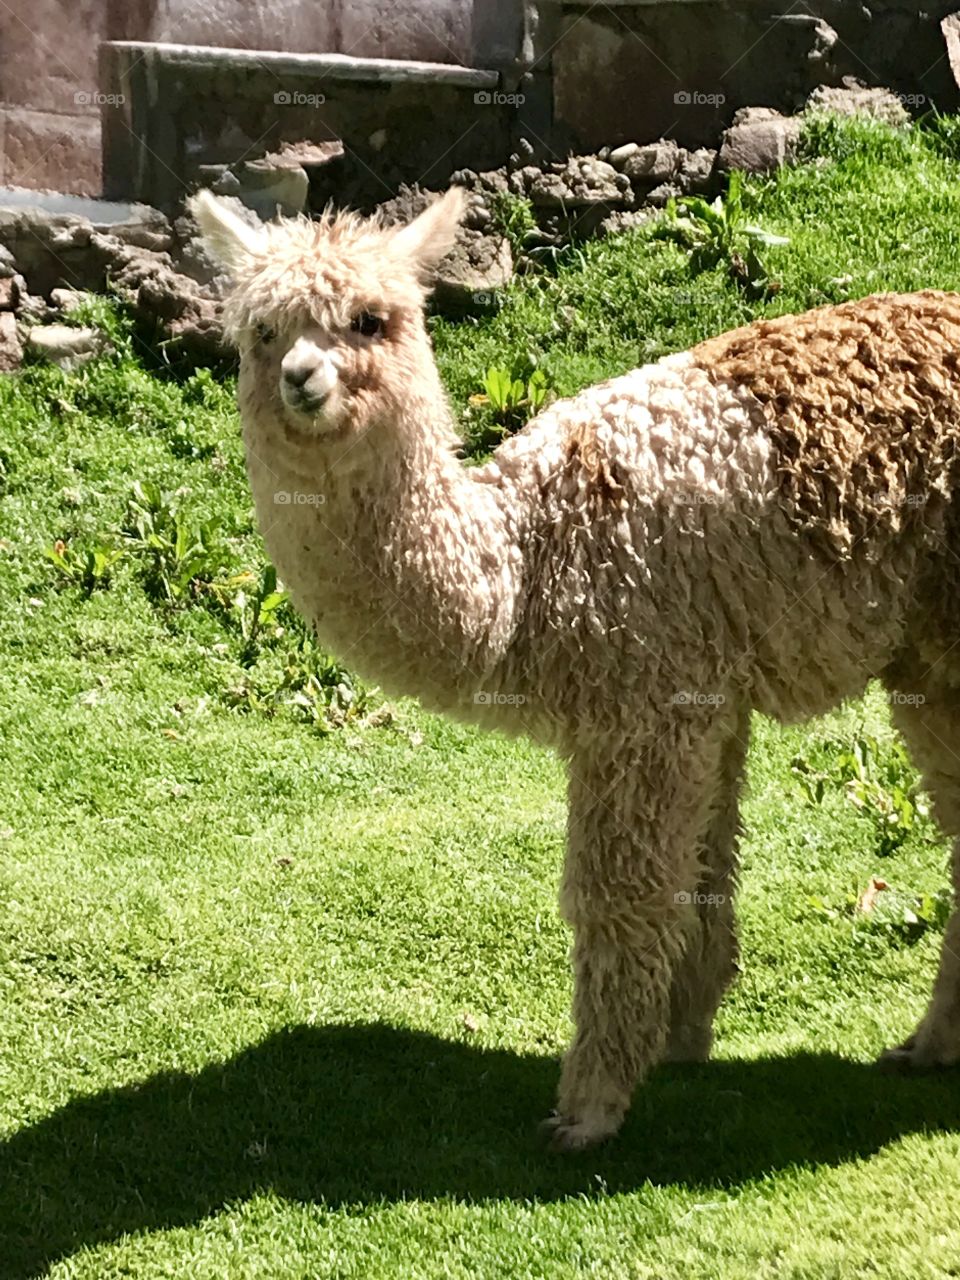 Furry llama grazing in an animal sanctuary outside of Cusco, Peru 